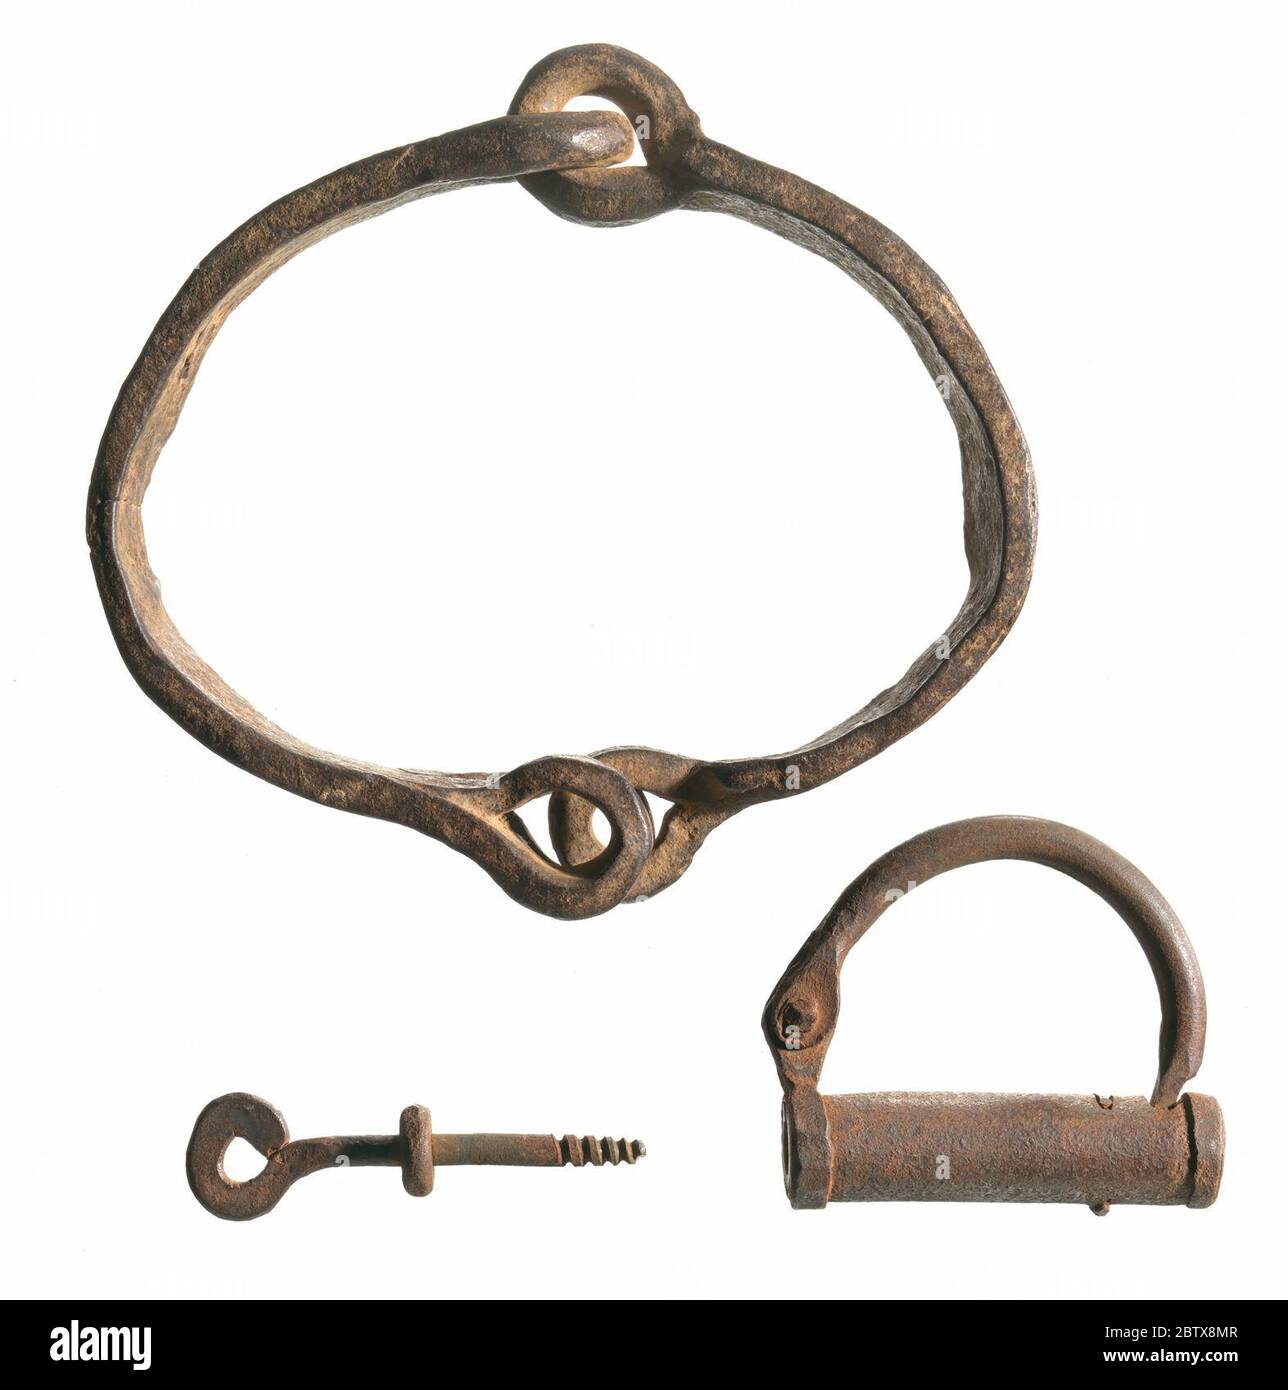 Viking Dublin Slave Collar, A Reconstruction By Daegrad, 41% OFF